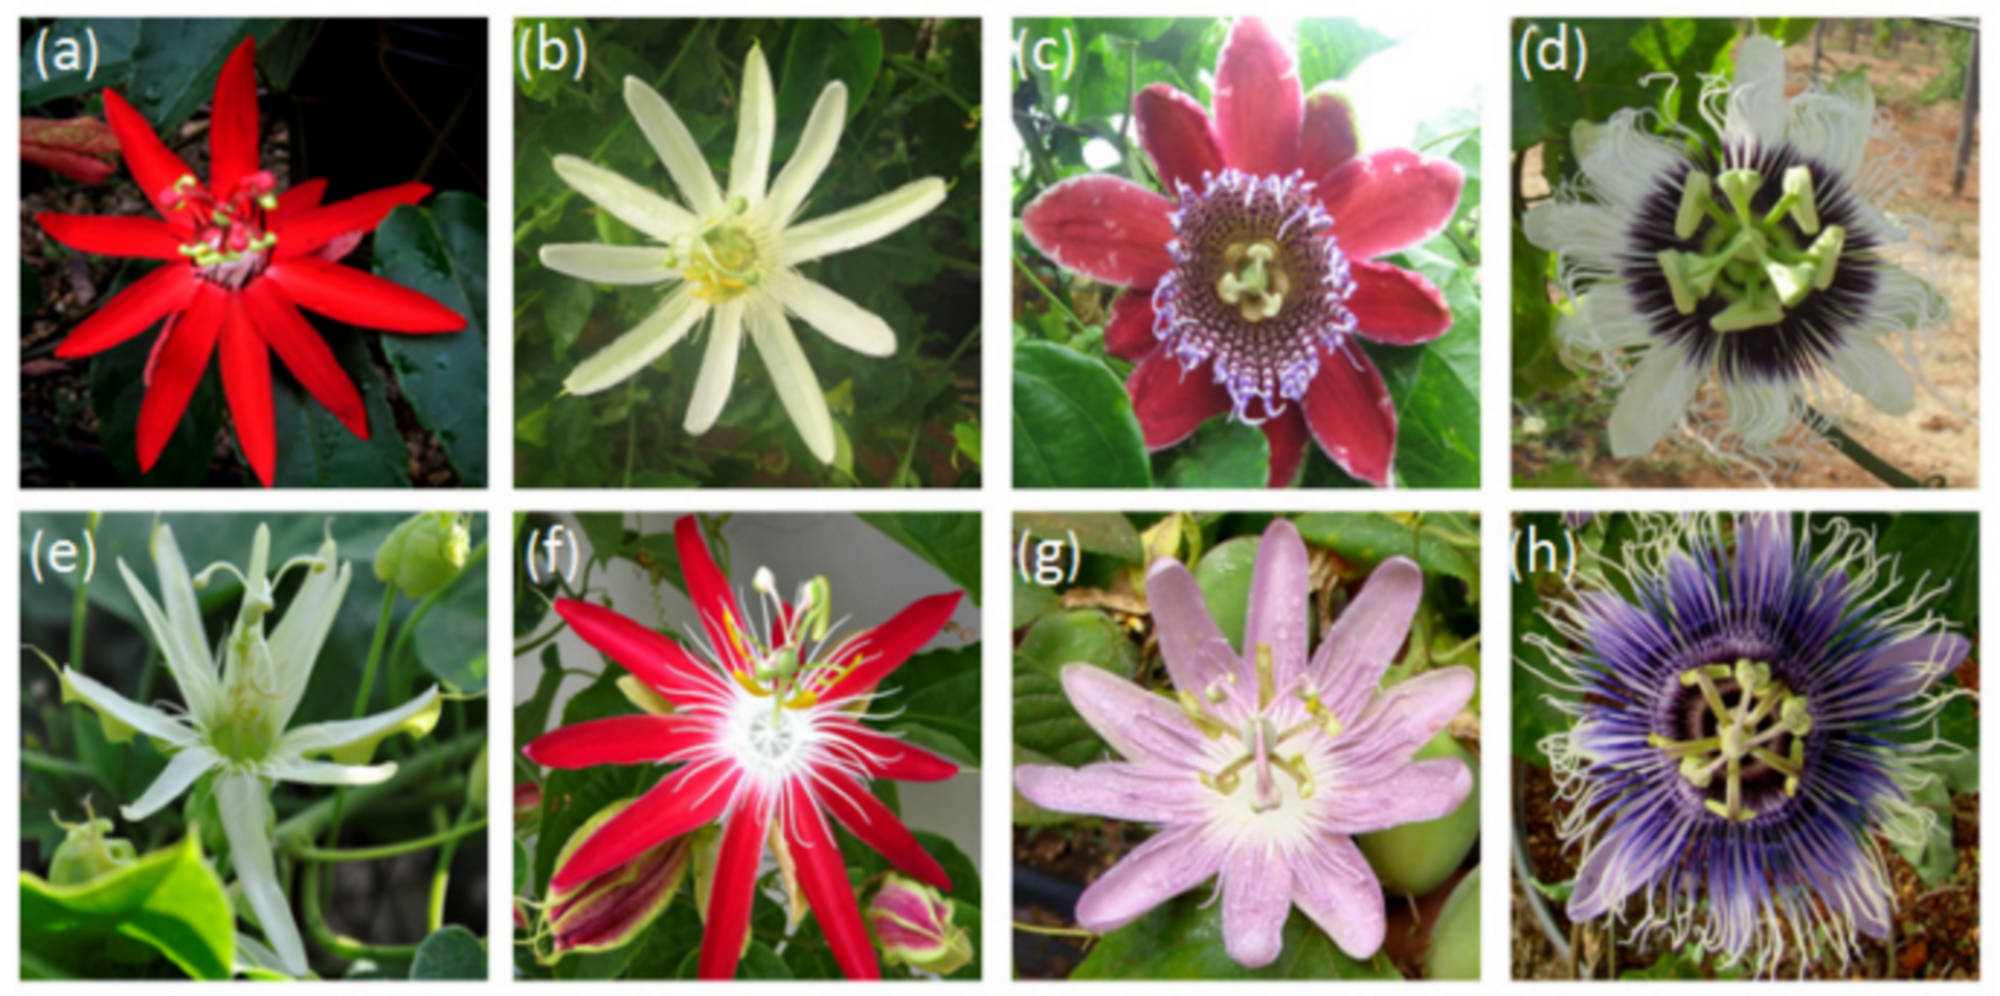 Passionfruit species flowers. Source: Cerqueira-Silva et al. (2014)